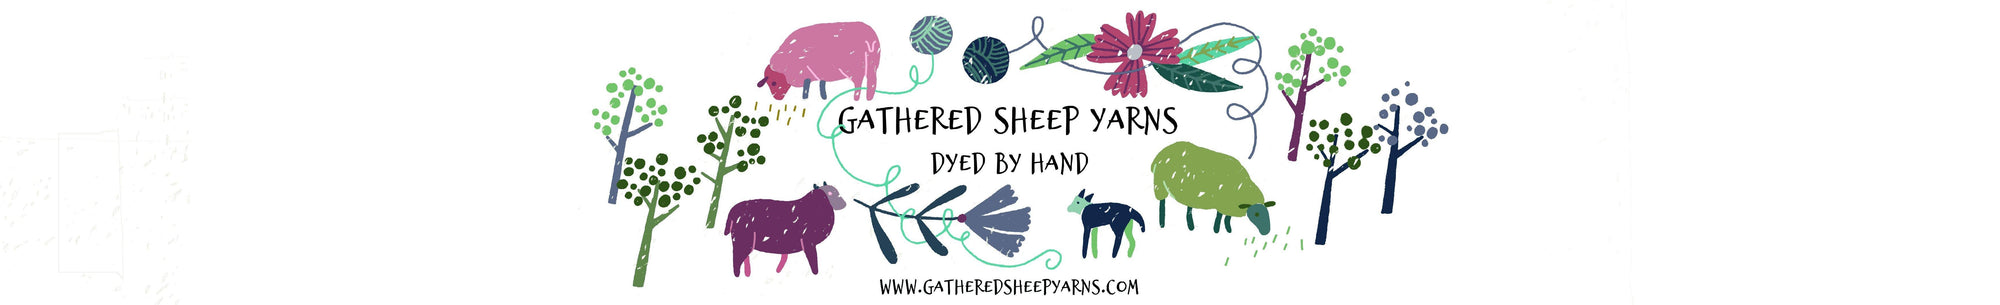 Gathered Sheep Yarns